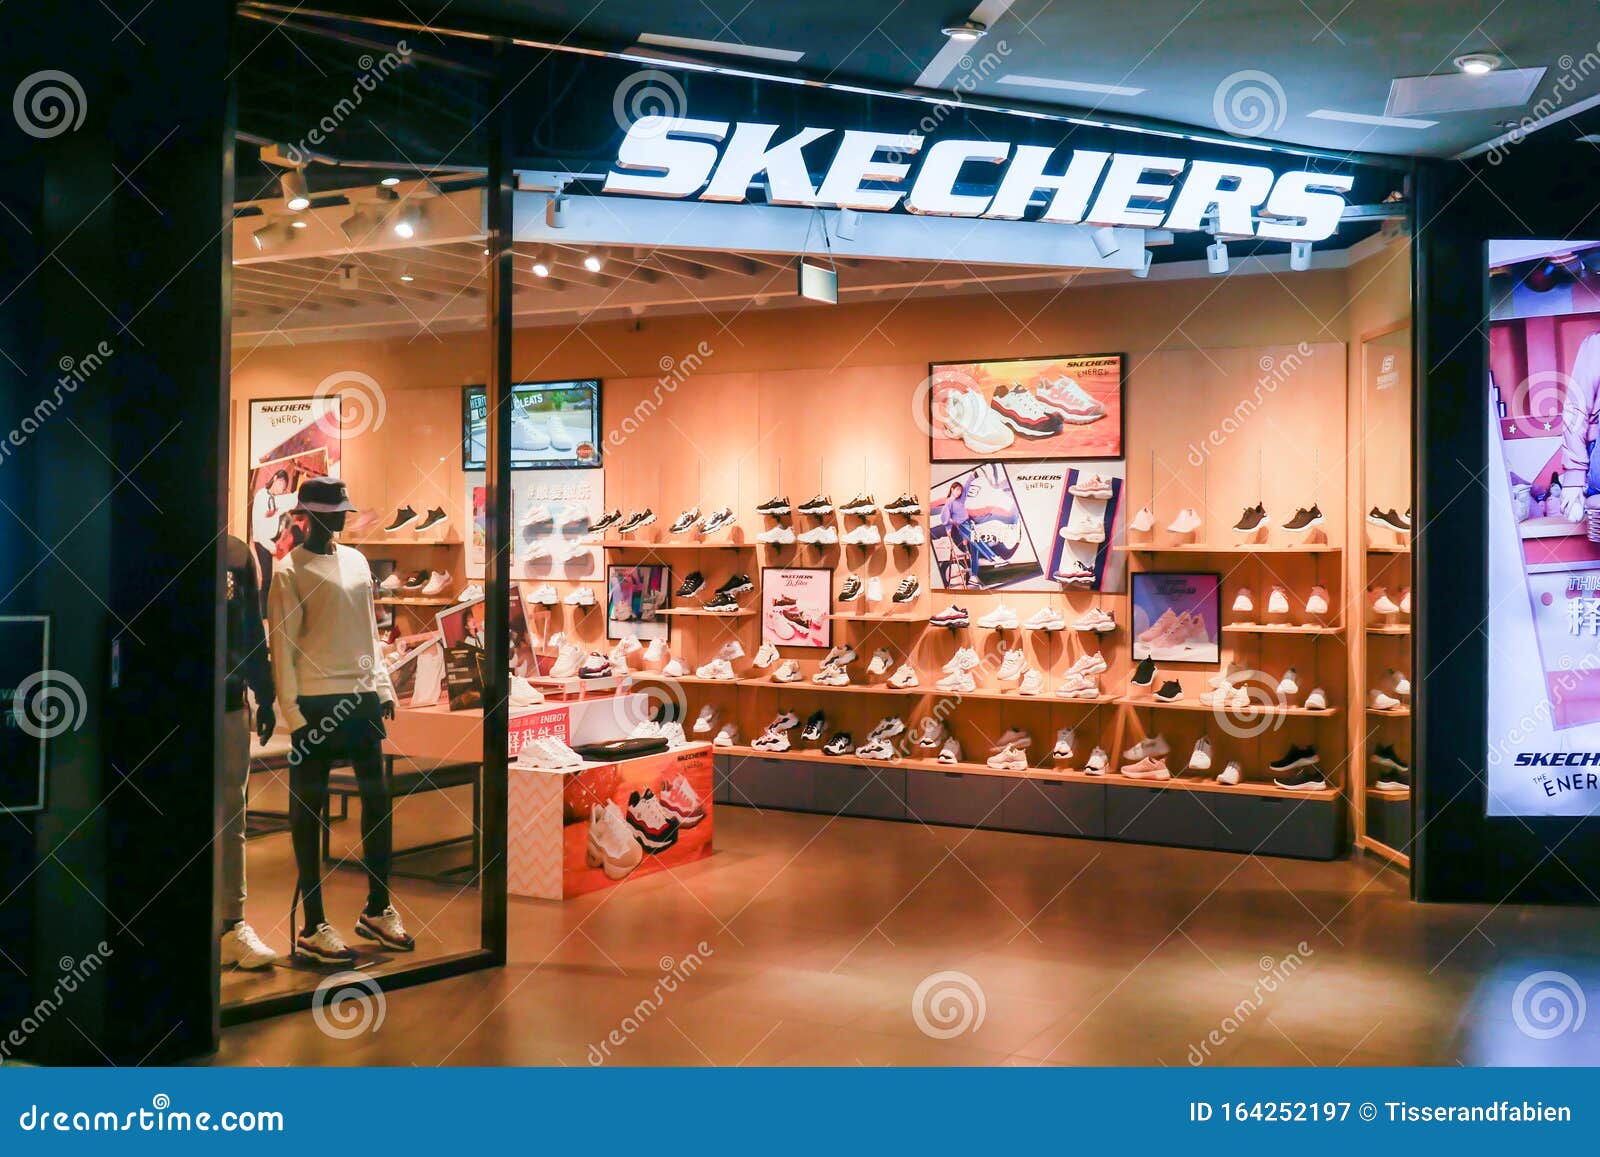 skechers shoes stores melbourne